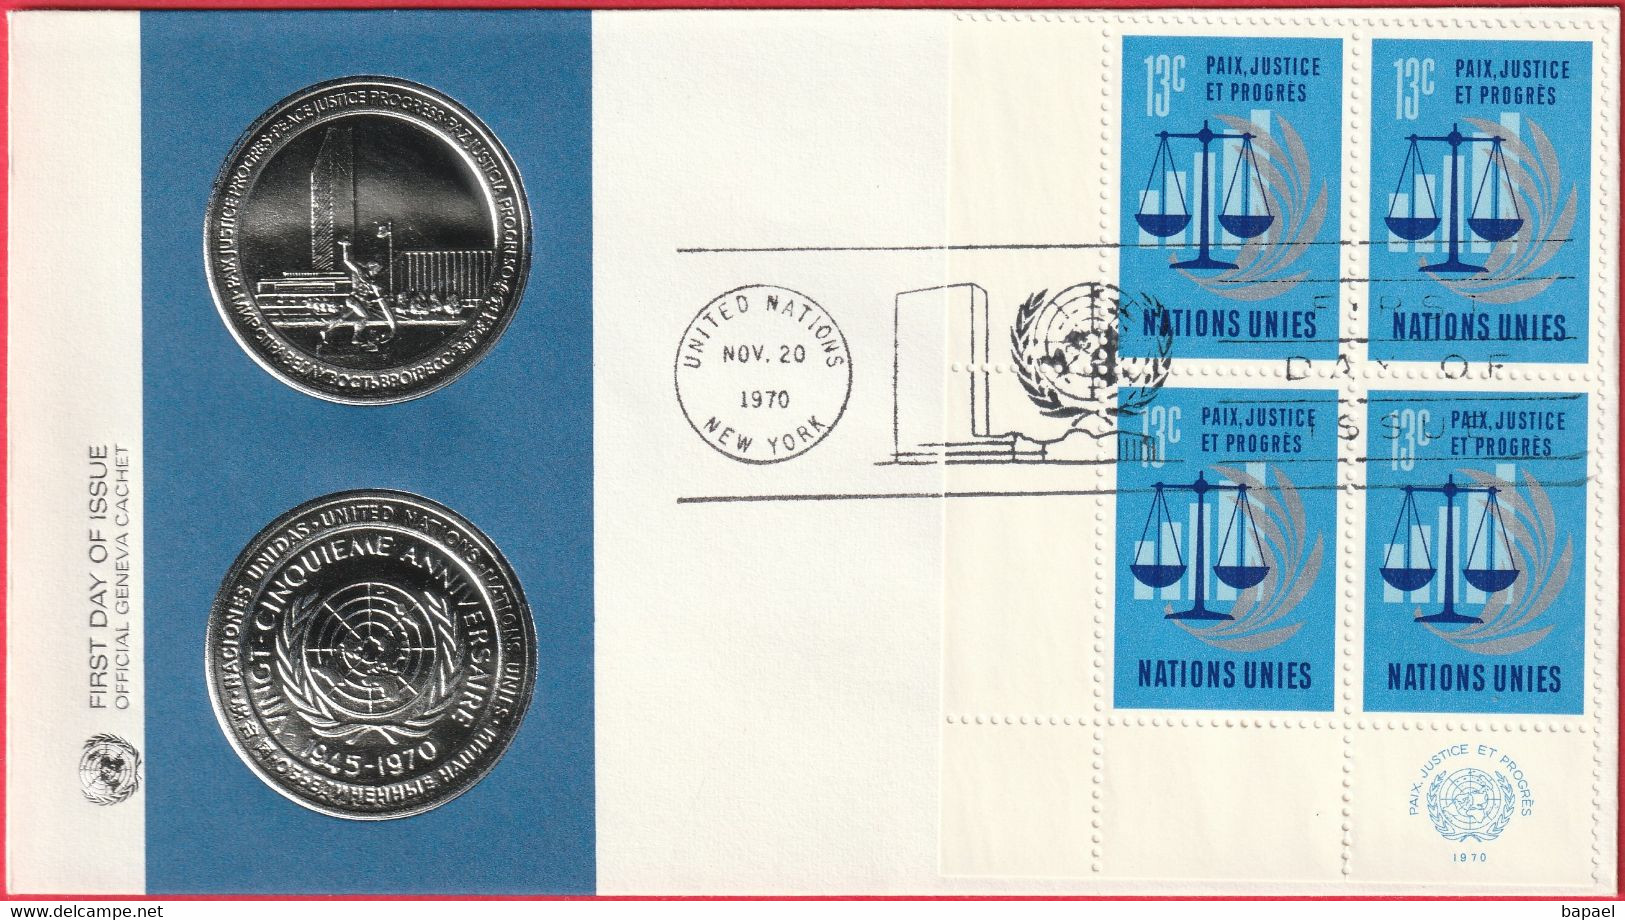 FDC - Enveloppe - Nations Unies - (New-York) (20-11-70) - Paix Justice Et Progrès (2) (Recto-Verso) - Lettres & Documents